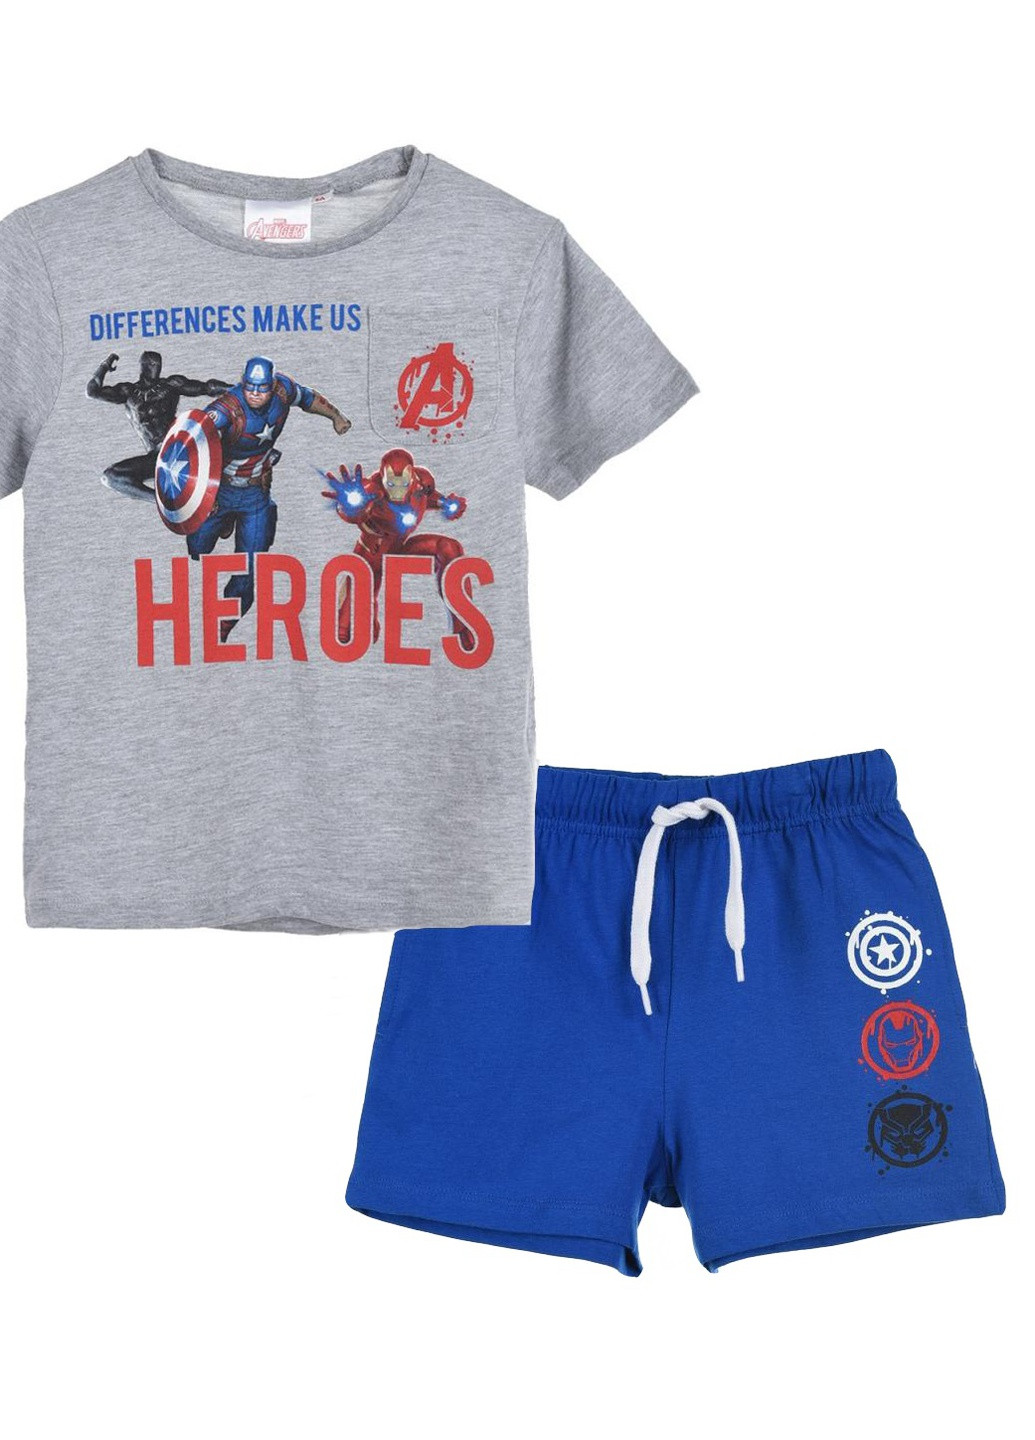 Синий комплект (футболка, шорты) avengers (мстители) ue10682 Disney